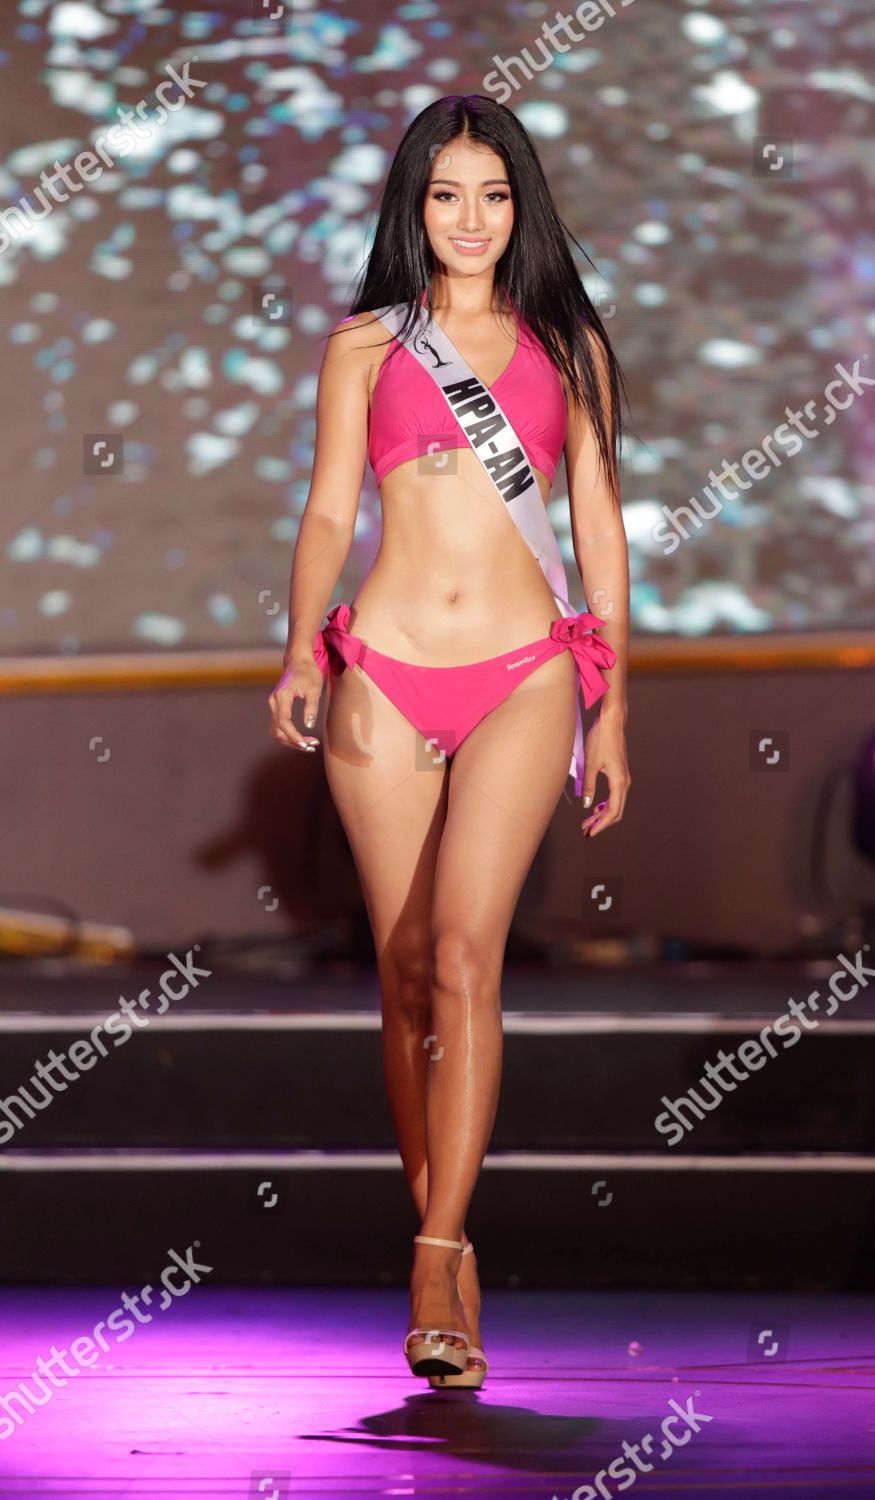 miss-universe-myanmar-2019-pageant-contest-in-yangon-shutterstock-editorial-10265479a.jpg